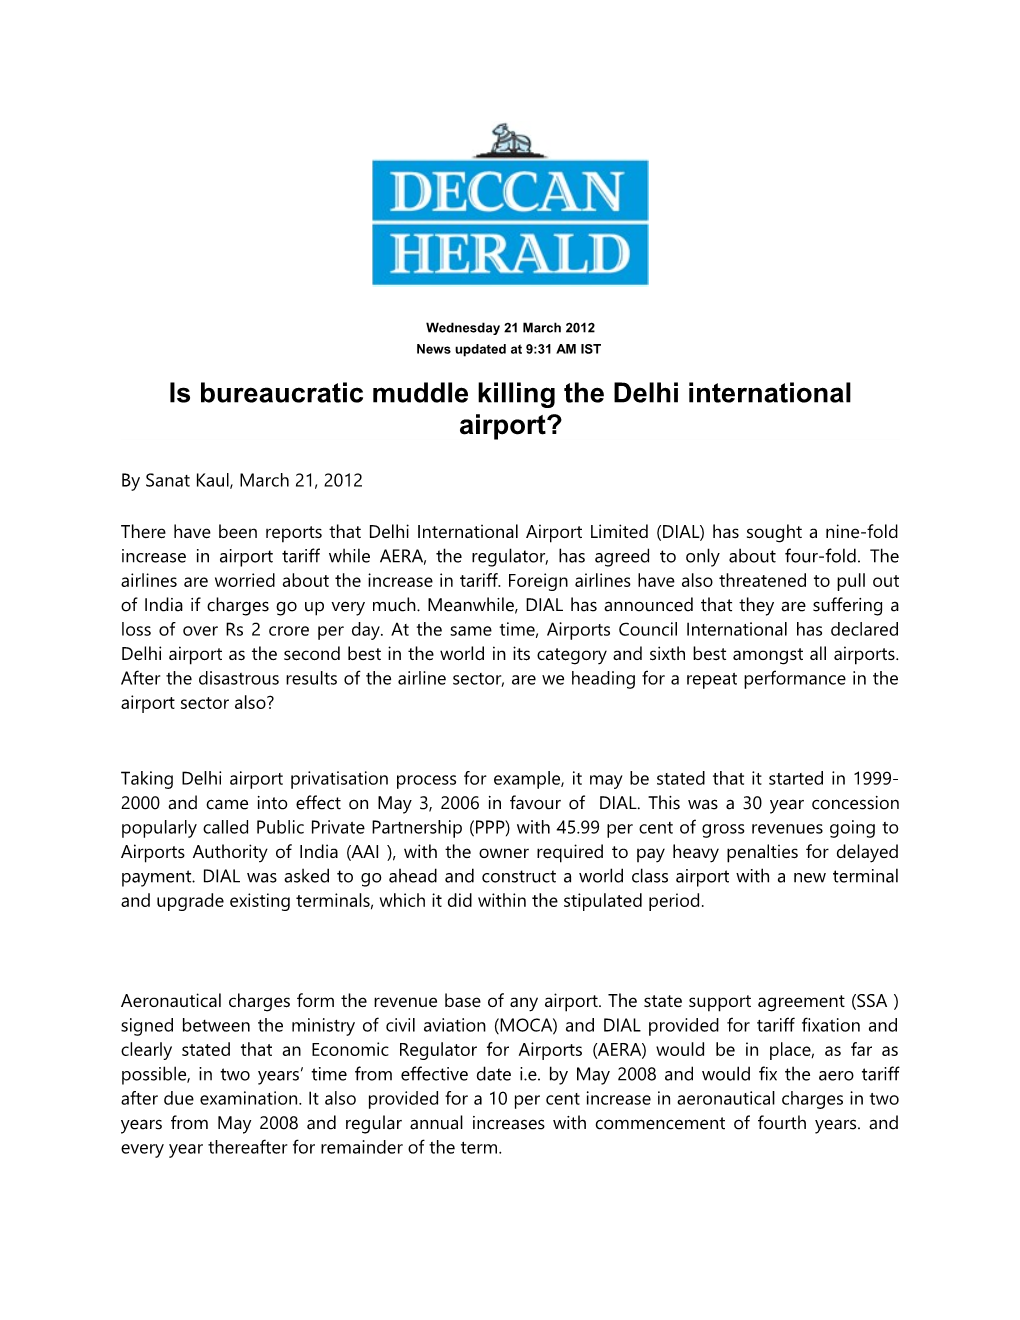 Is Bureaucratic Muddle Killing the Delhi International Airport?